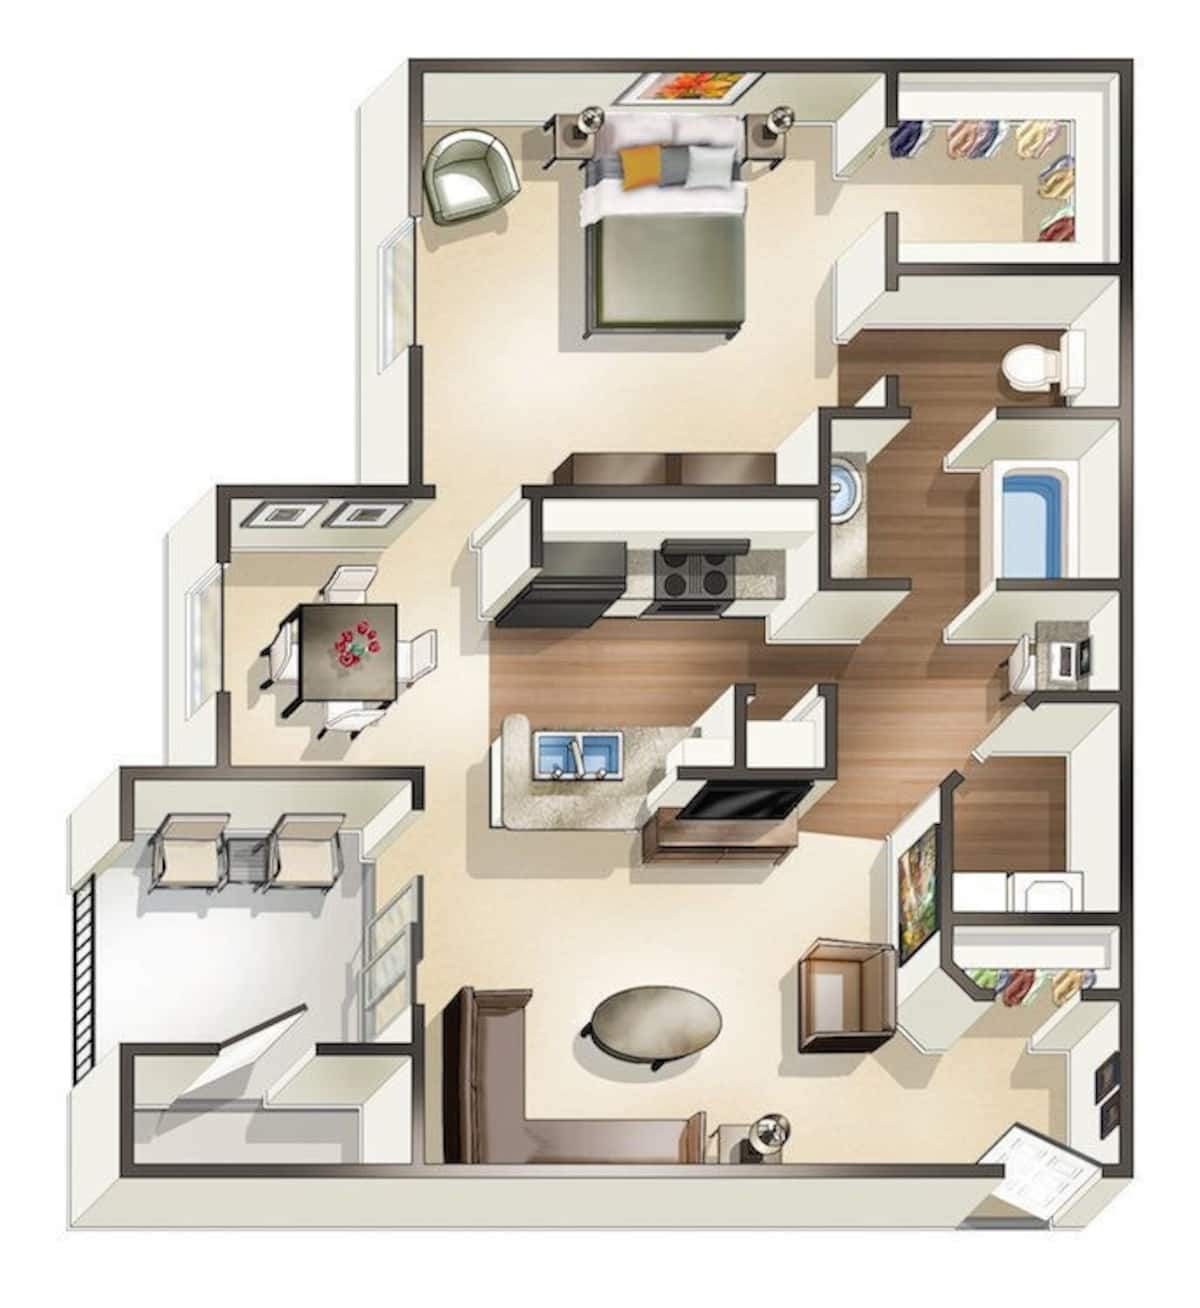 Floorplan diagram for A1C - R2, showing 1 bedroom